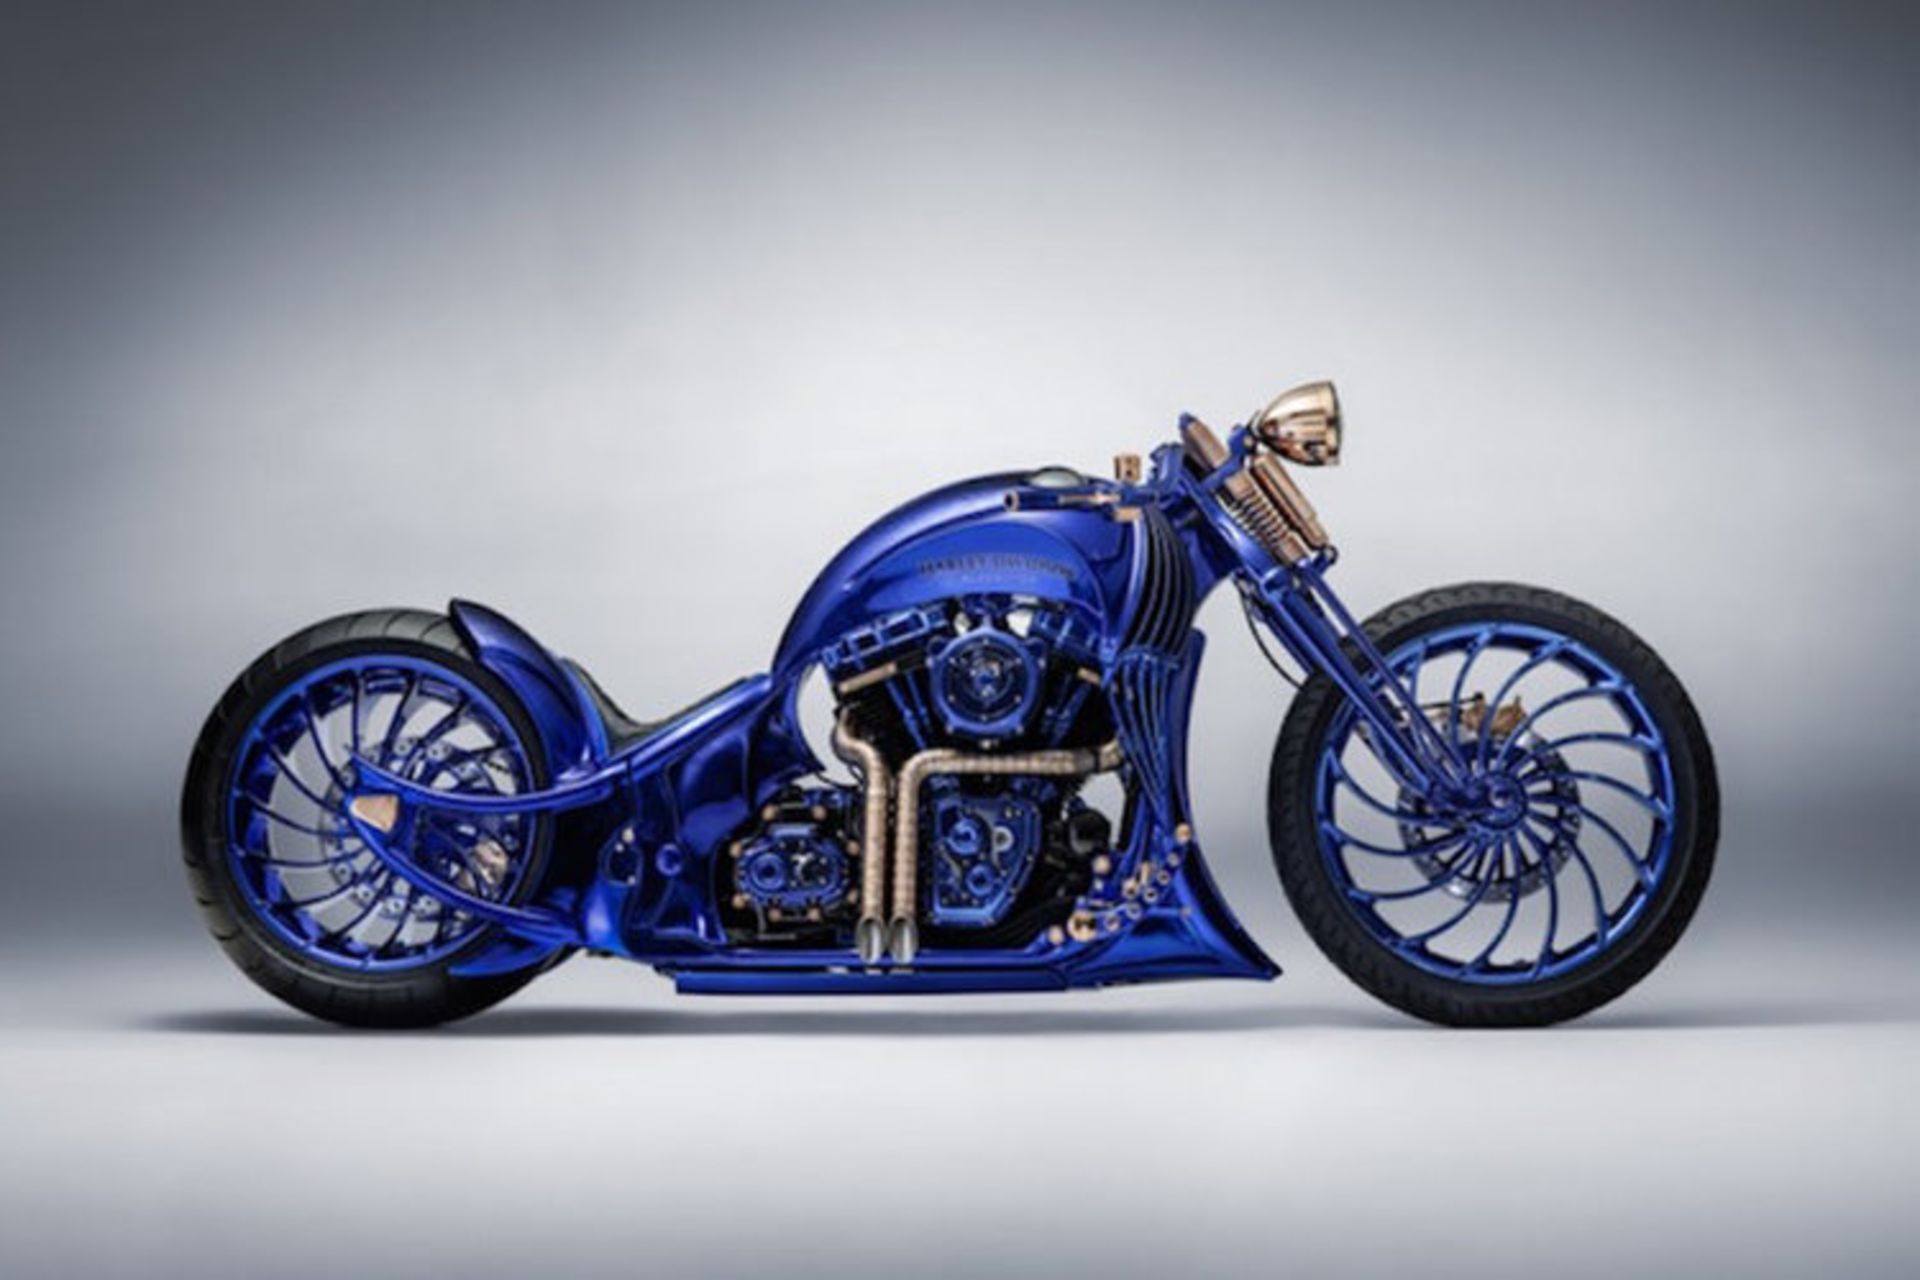 Harley-Davidson Softail motorcycle / موتورسیکلت هارلی دیویدسن سافتیل